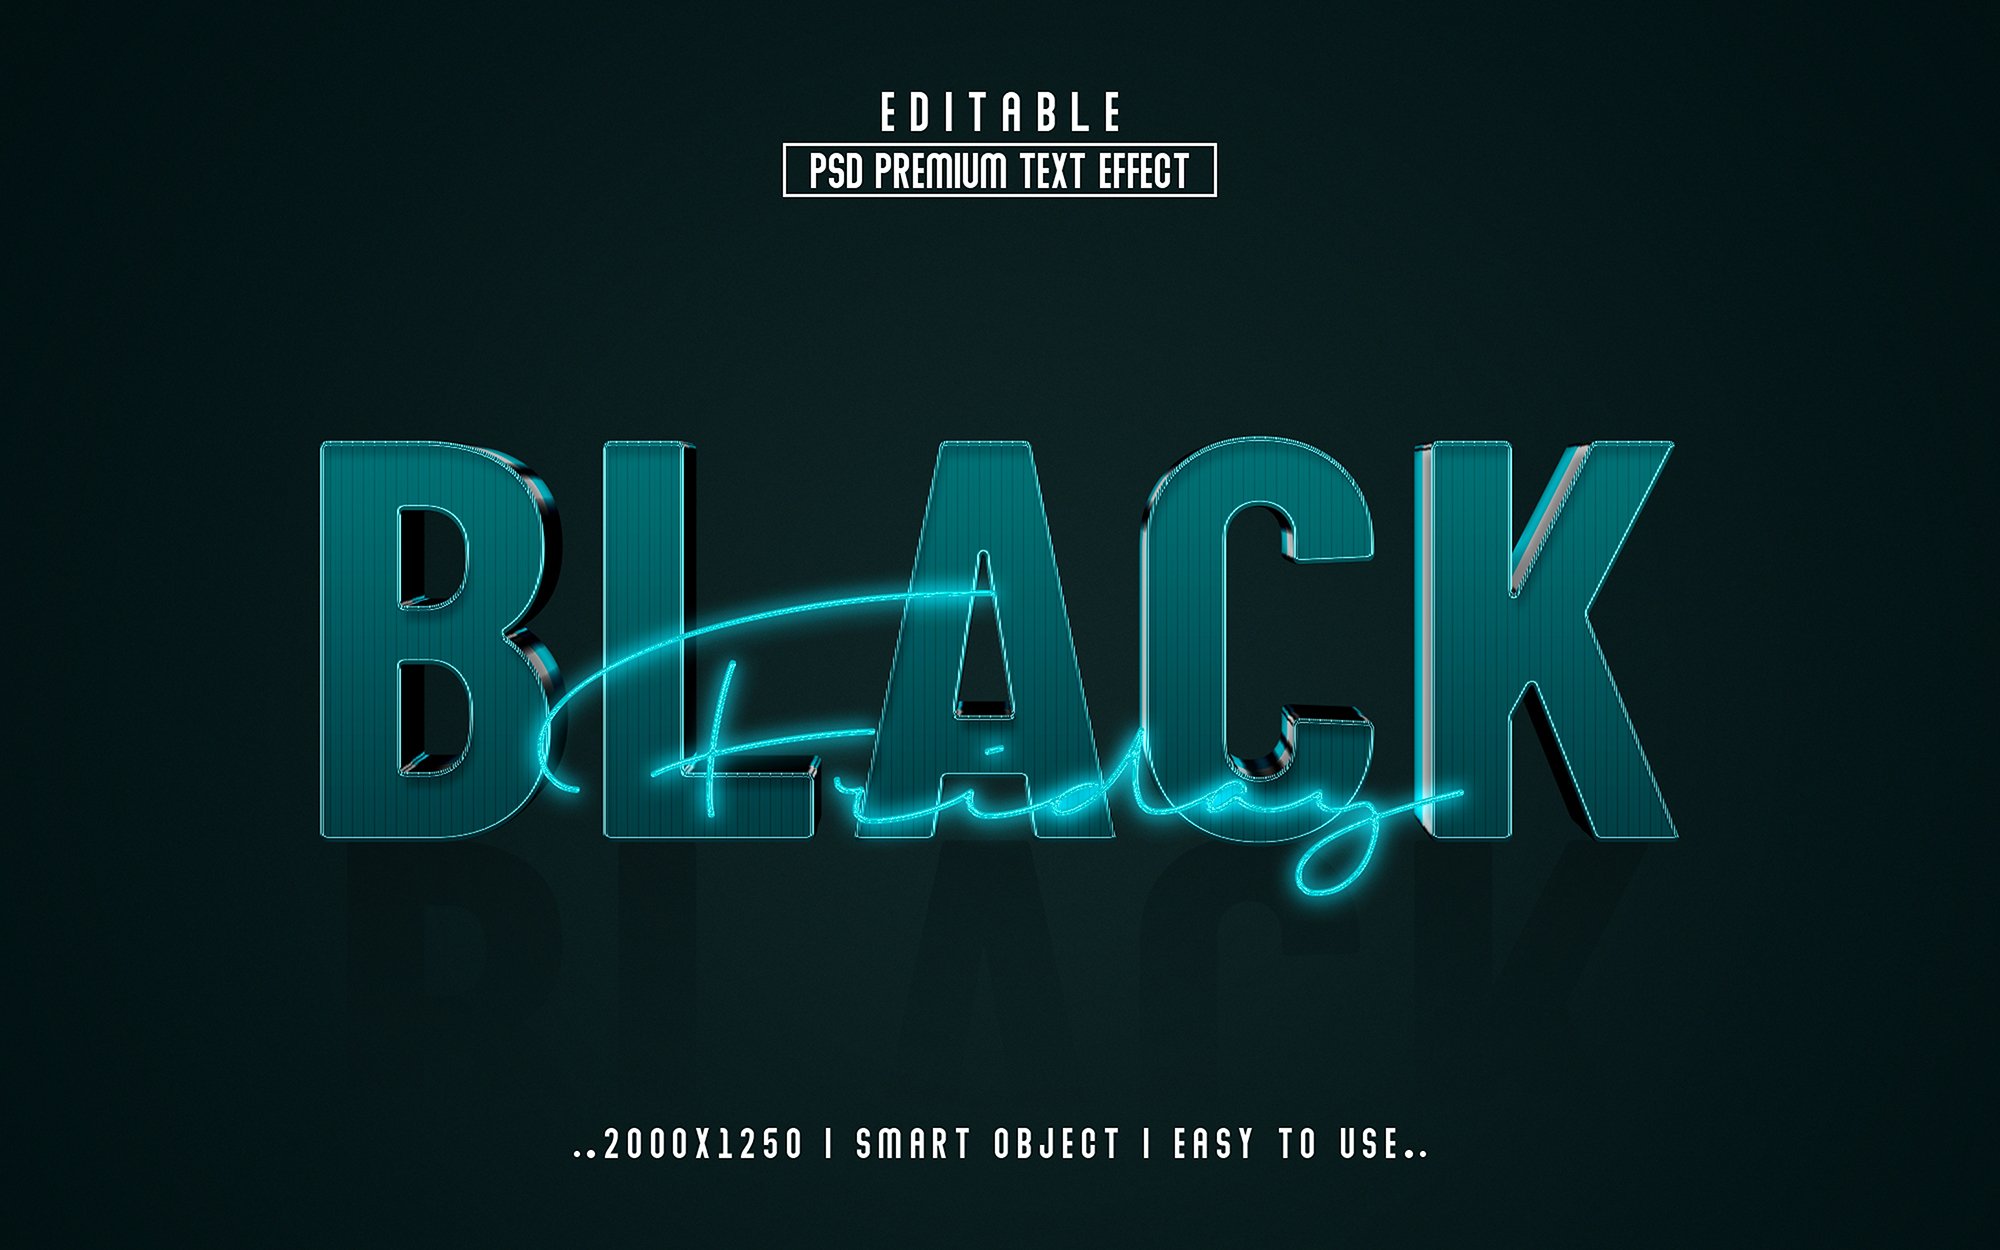 Black Friday 3D Editable  Text stylecover image.